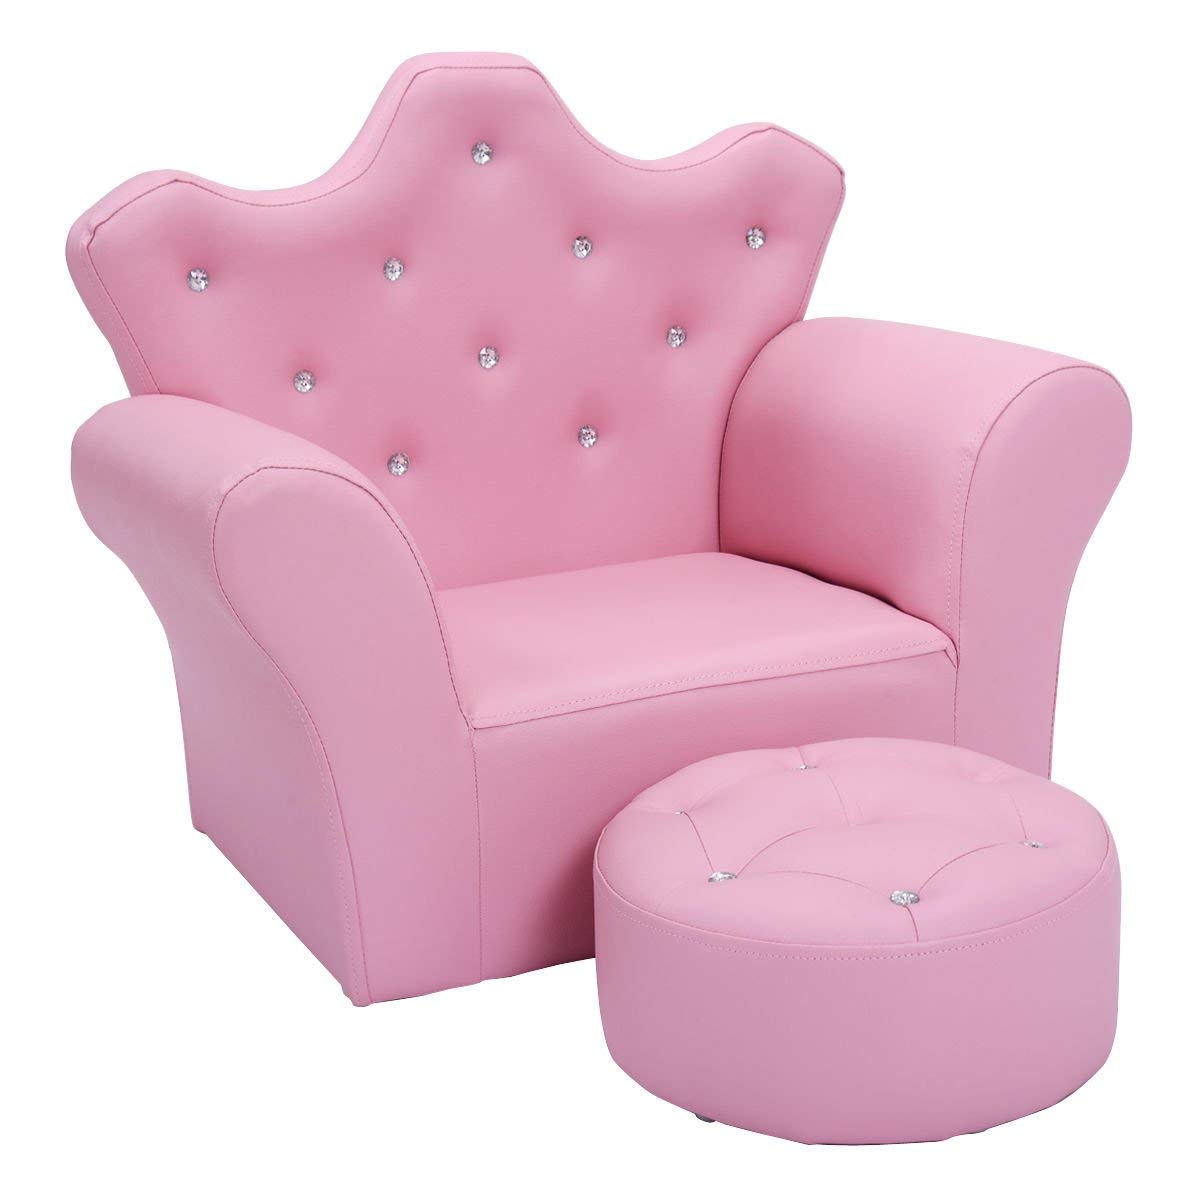 amazon.com: Costzon children's sofa, princess sofa made of PU leather with embedded crystal, IITXPFQ